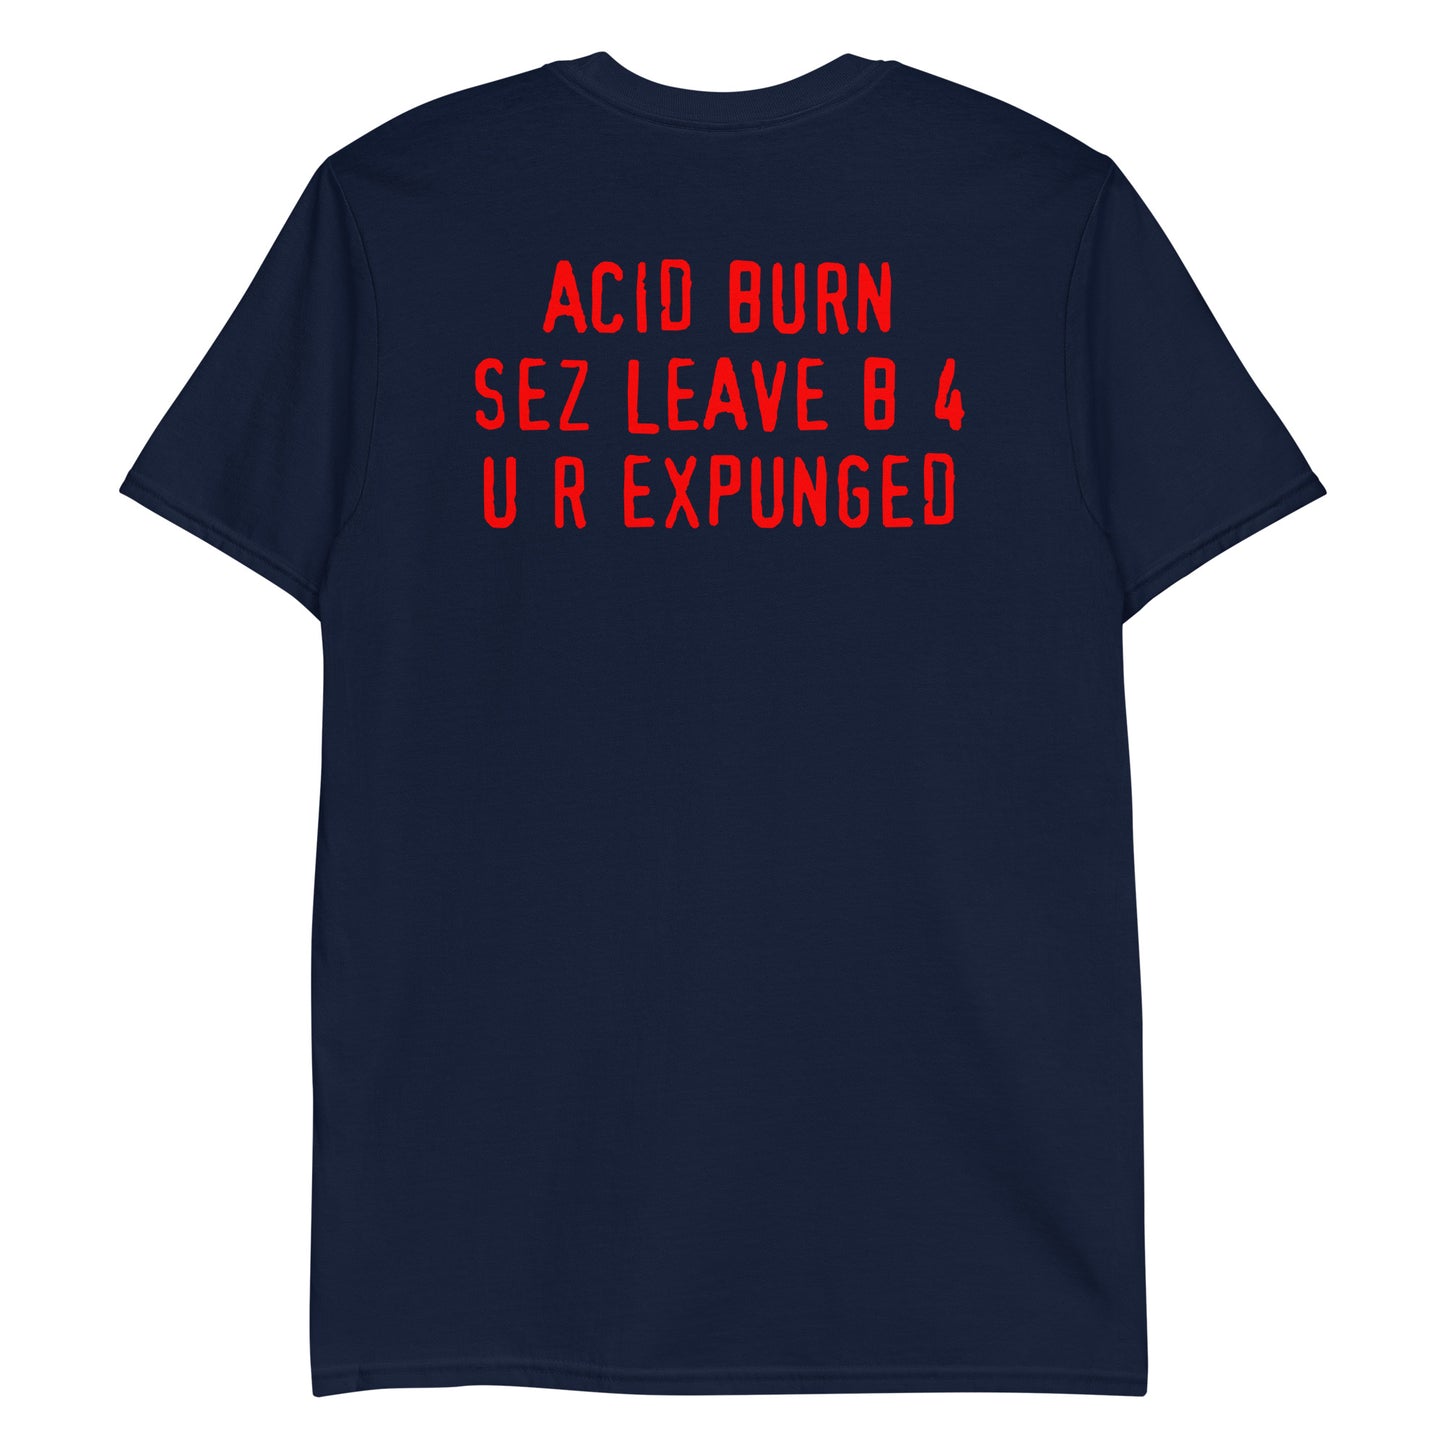 aCiD bUrN double-sided t-shirt